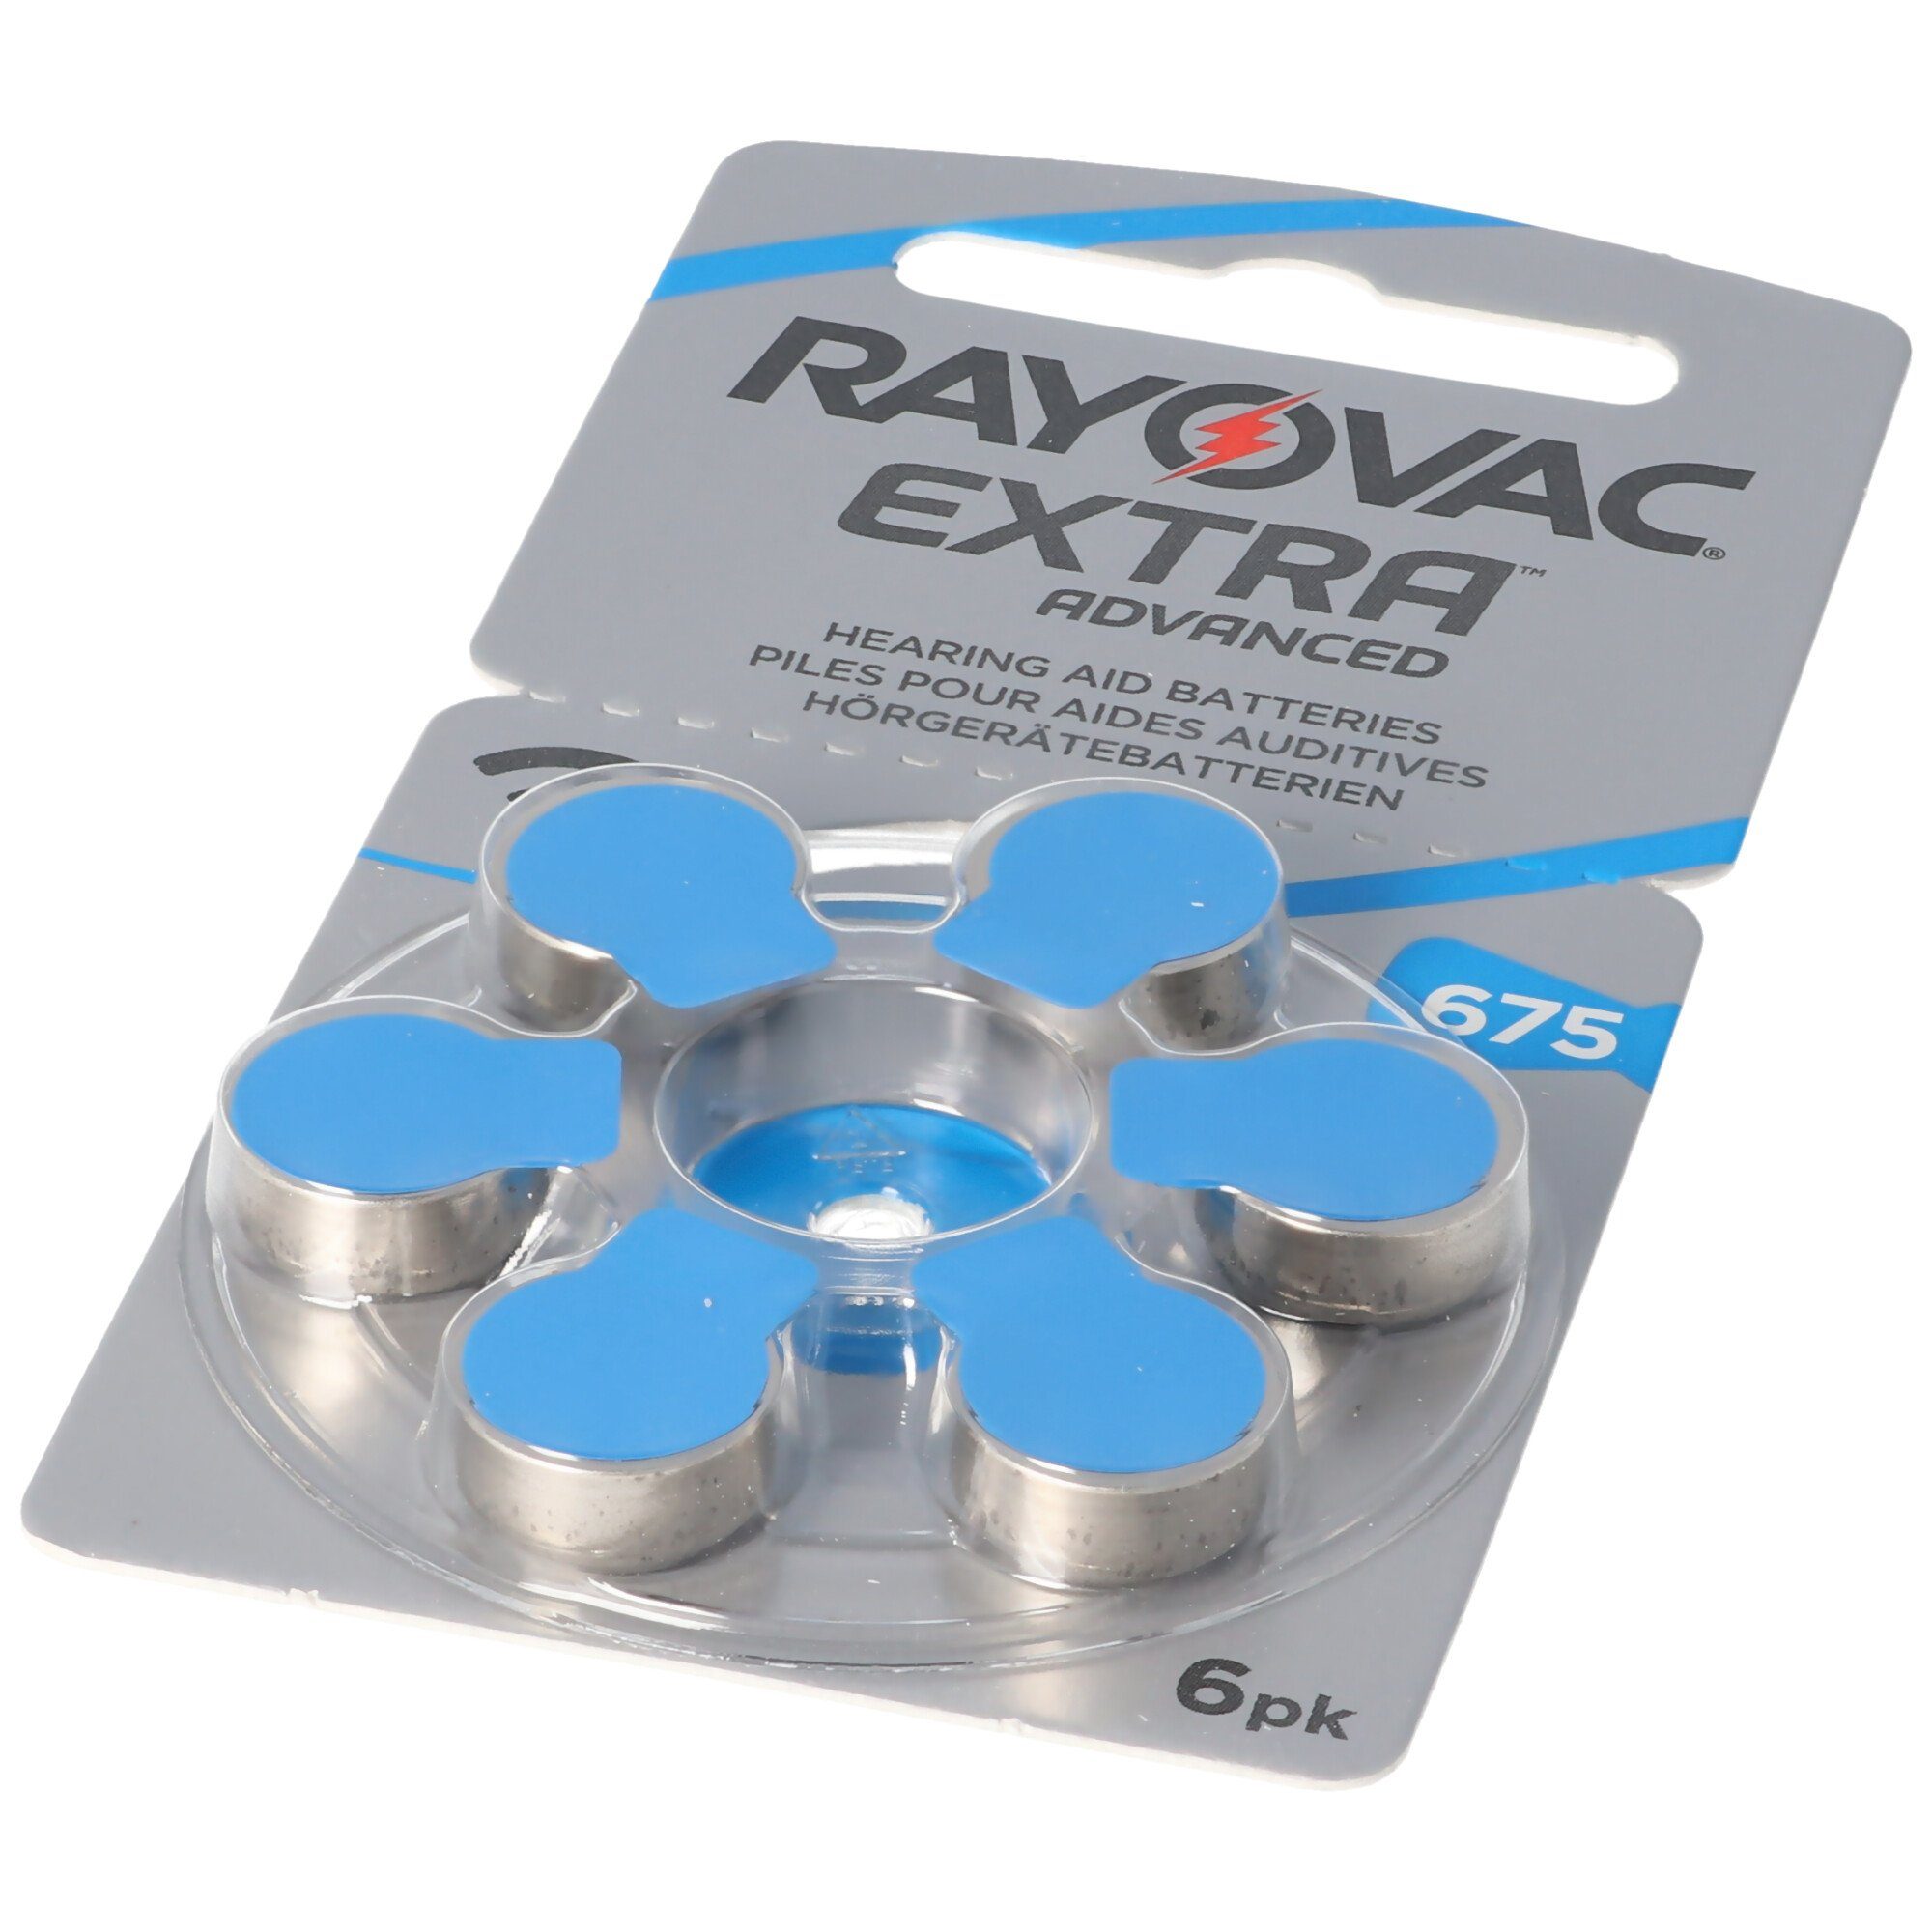 RAYOVAC Rayovac Extra Advanced 4600, V) Batterie, HA675, (1,4 PR44, Hörgerätebatterie Acoustic